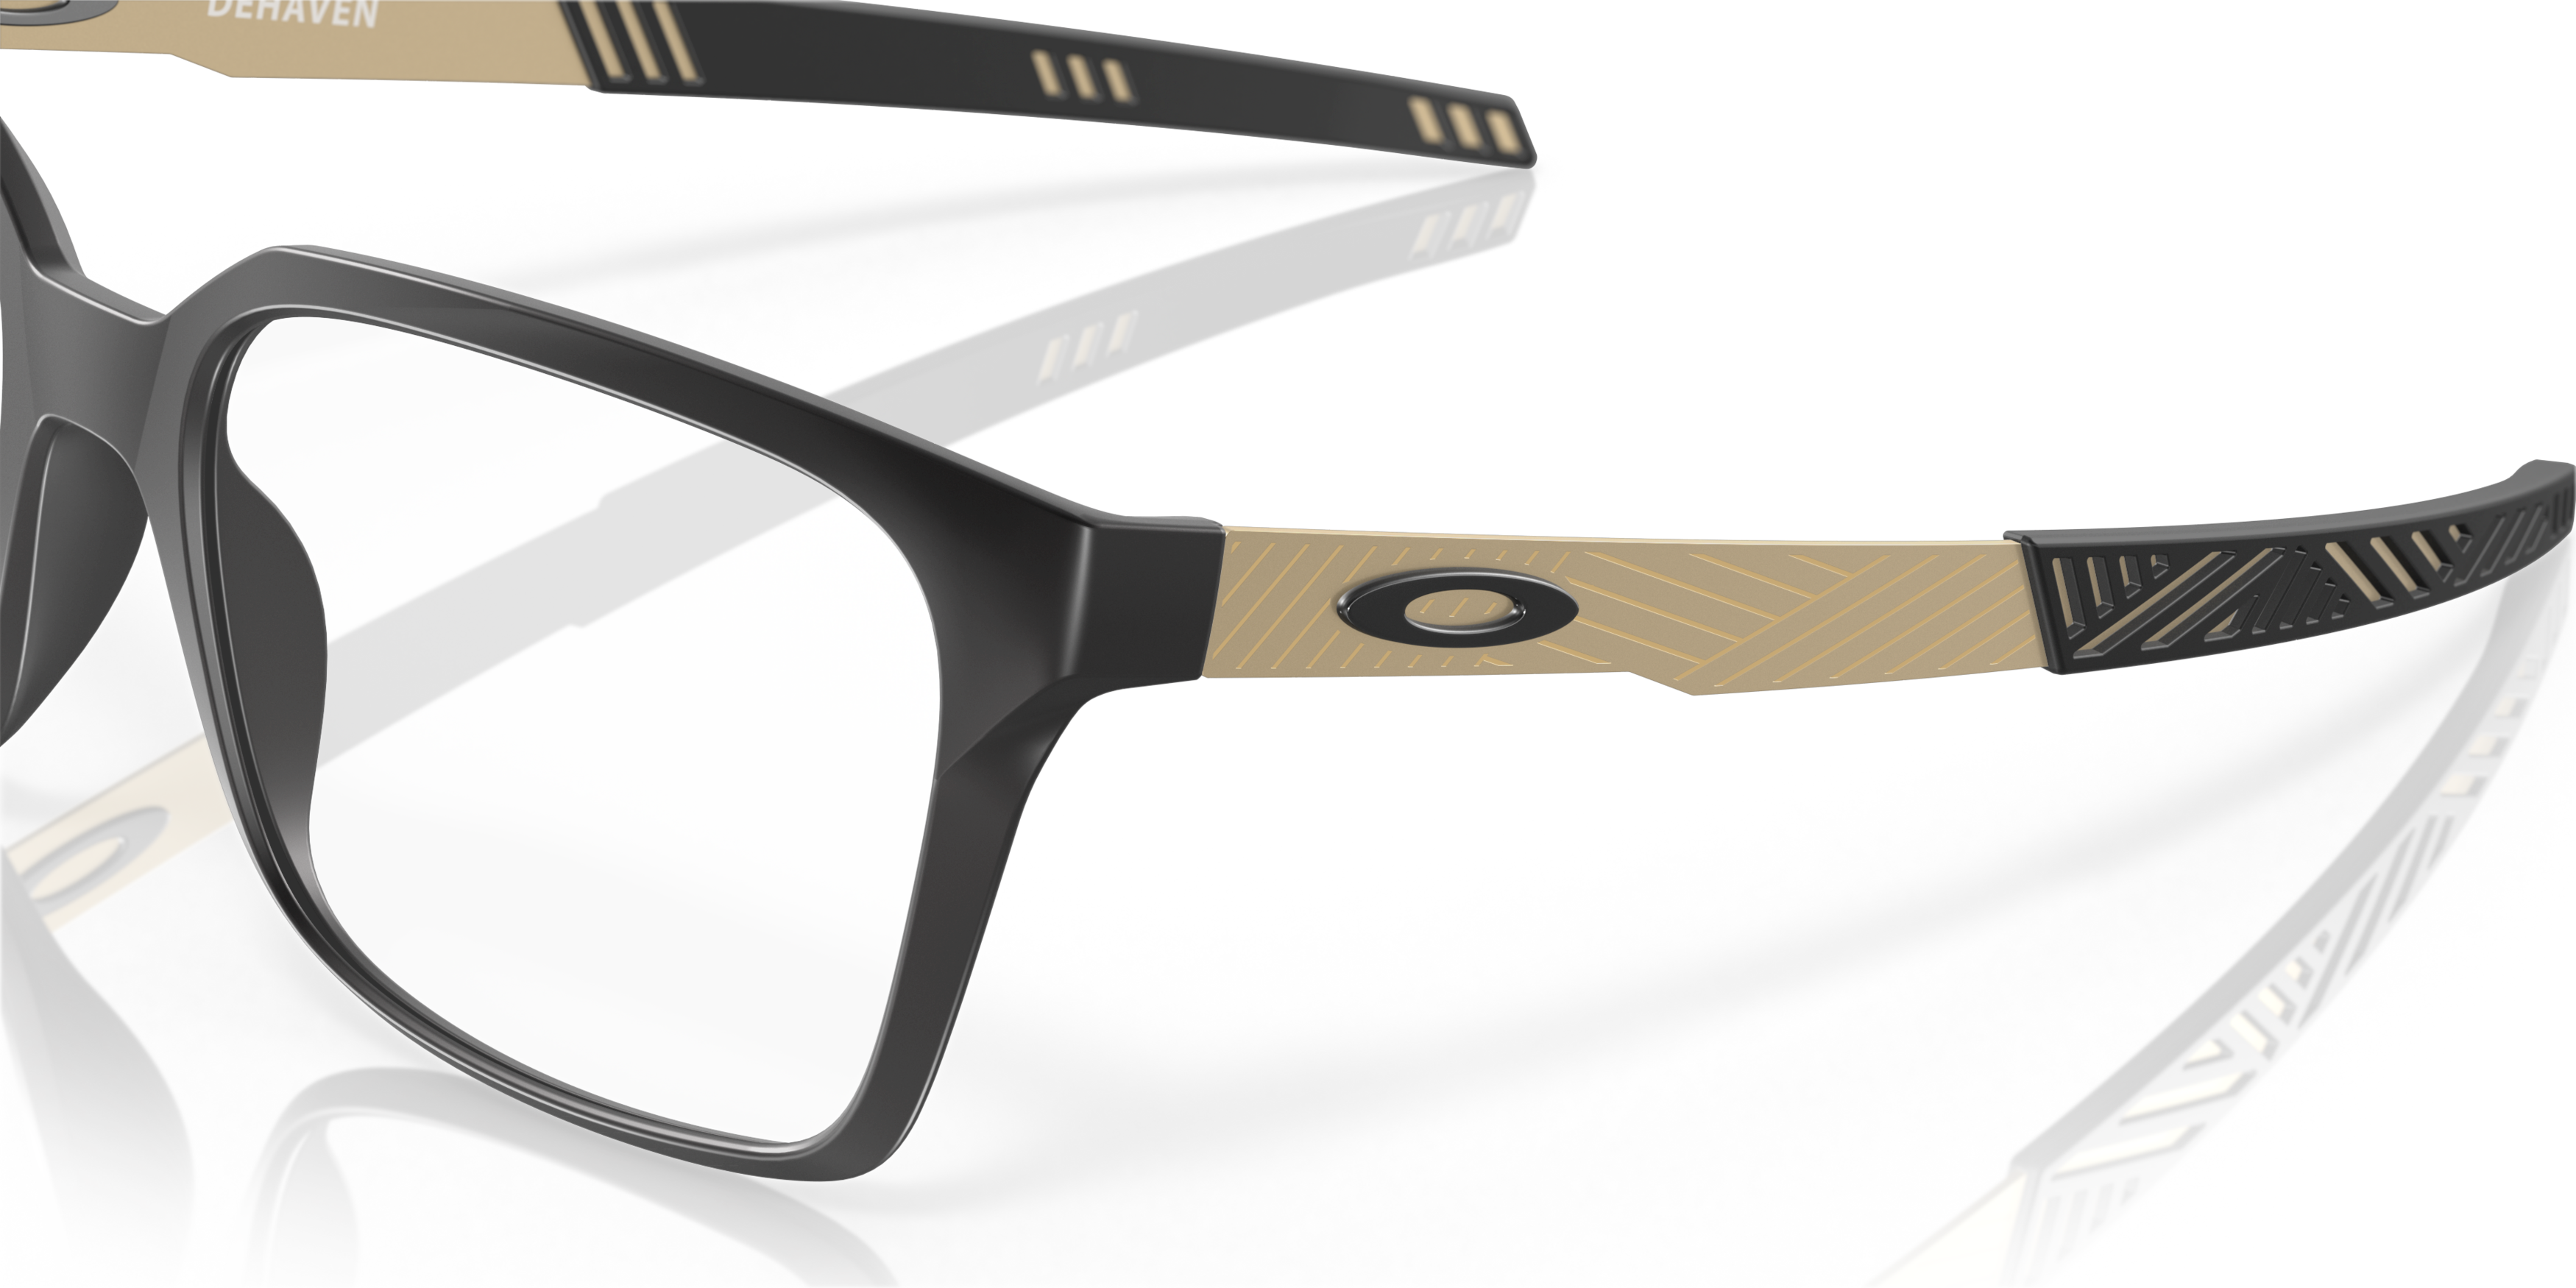 Detail01 Oakley Dehaven OX 8054 Glasses Transparent / Black